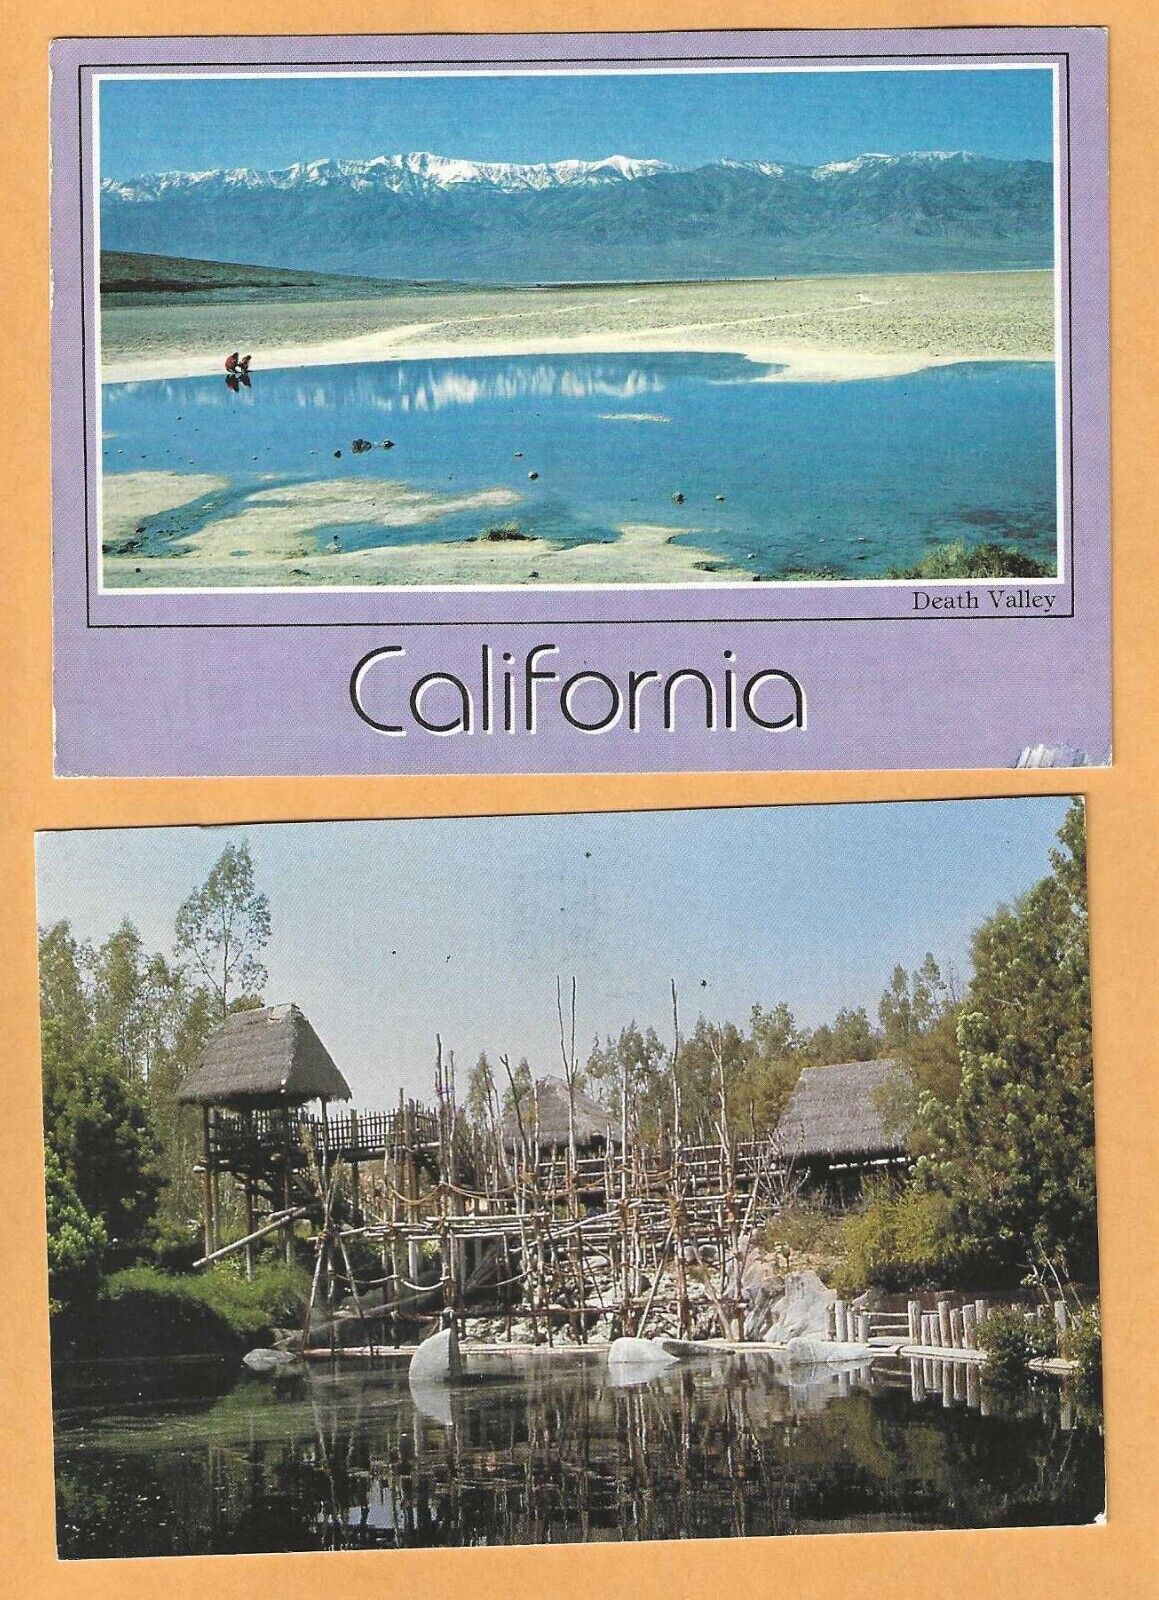 California Post Cards. 3 cards. Size: 4x6.  Disneyland. Death Valley. San Diego